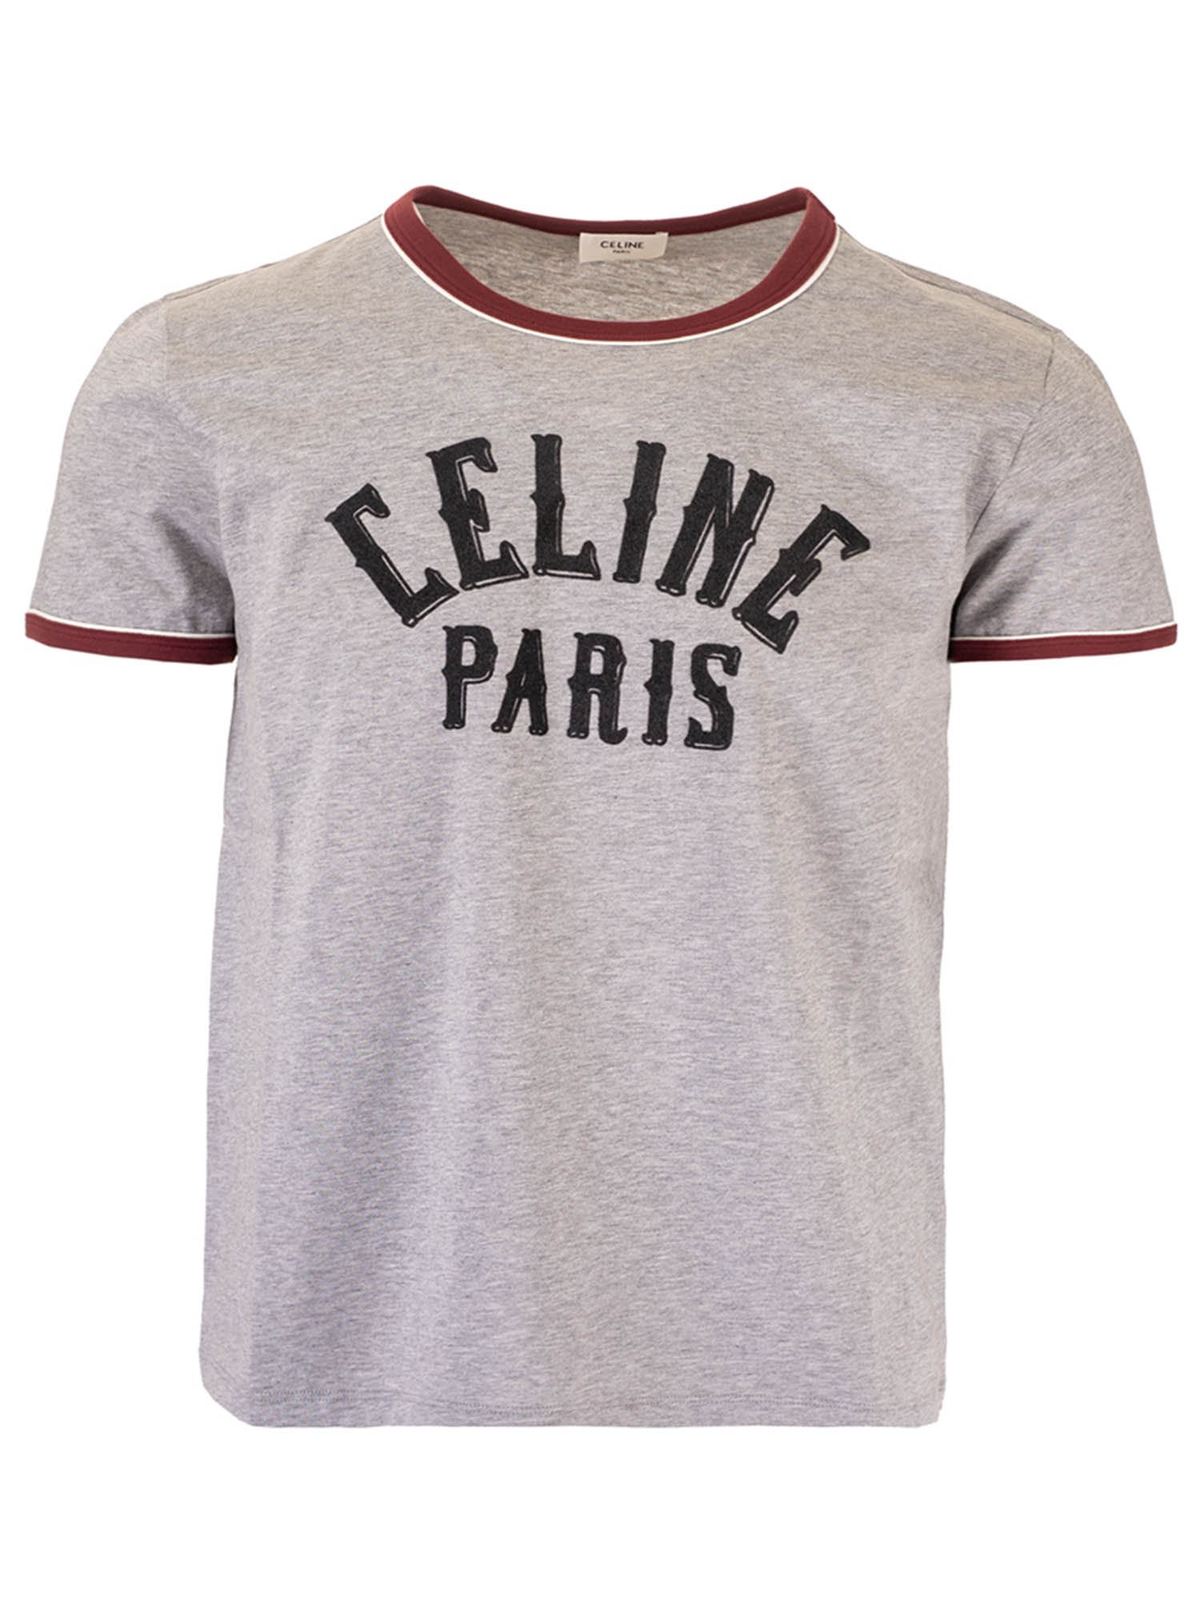 Celine Paris T-shirt in gray